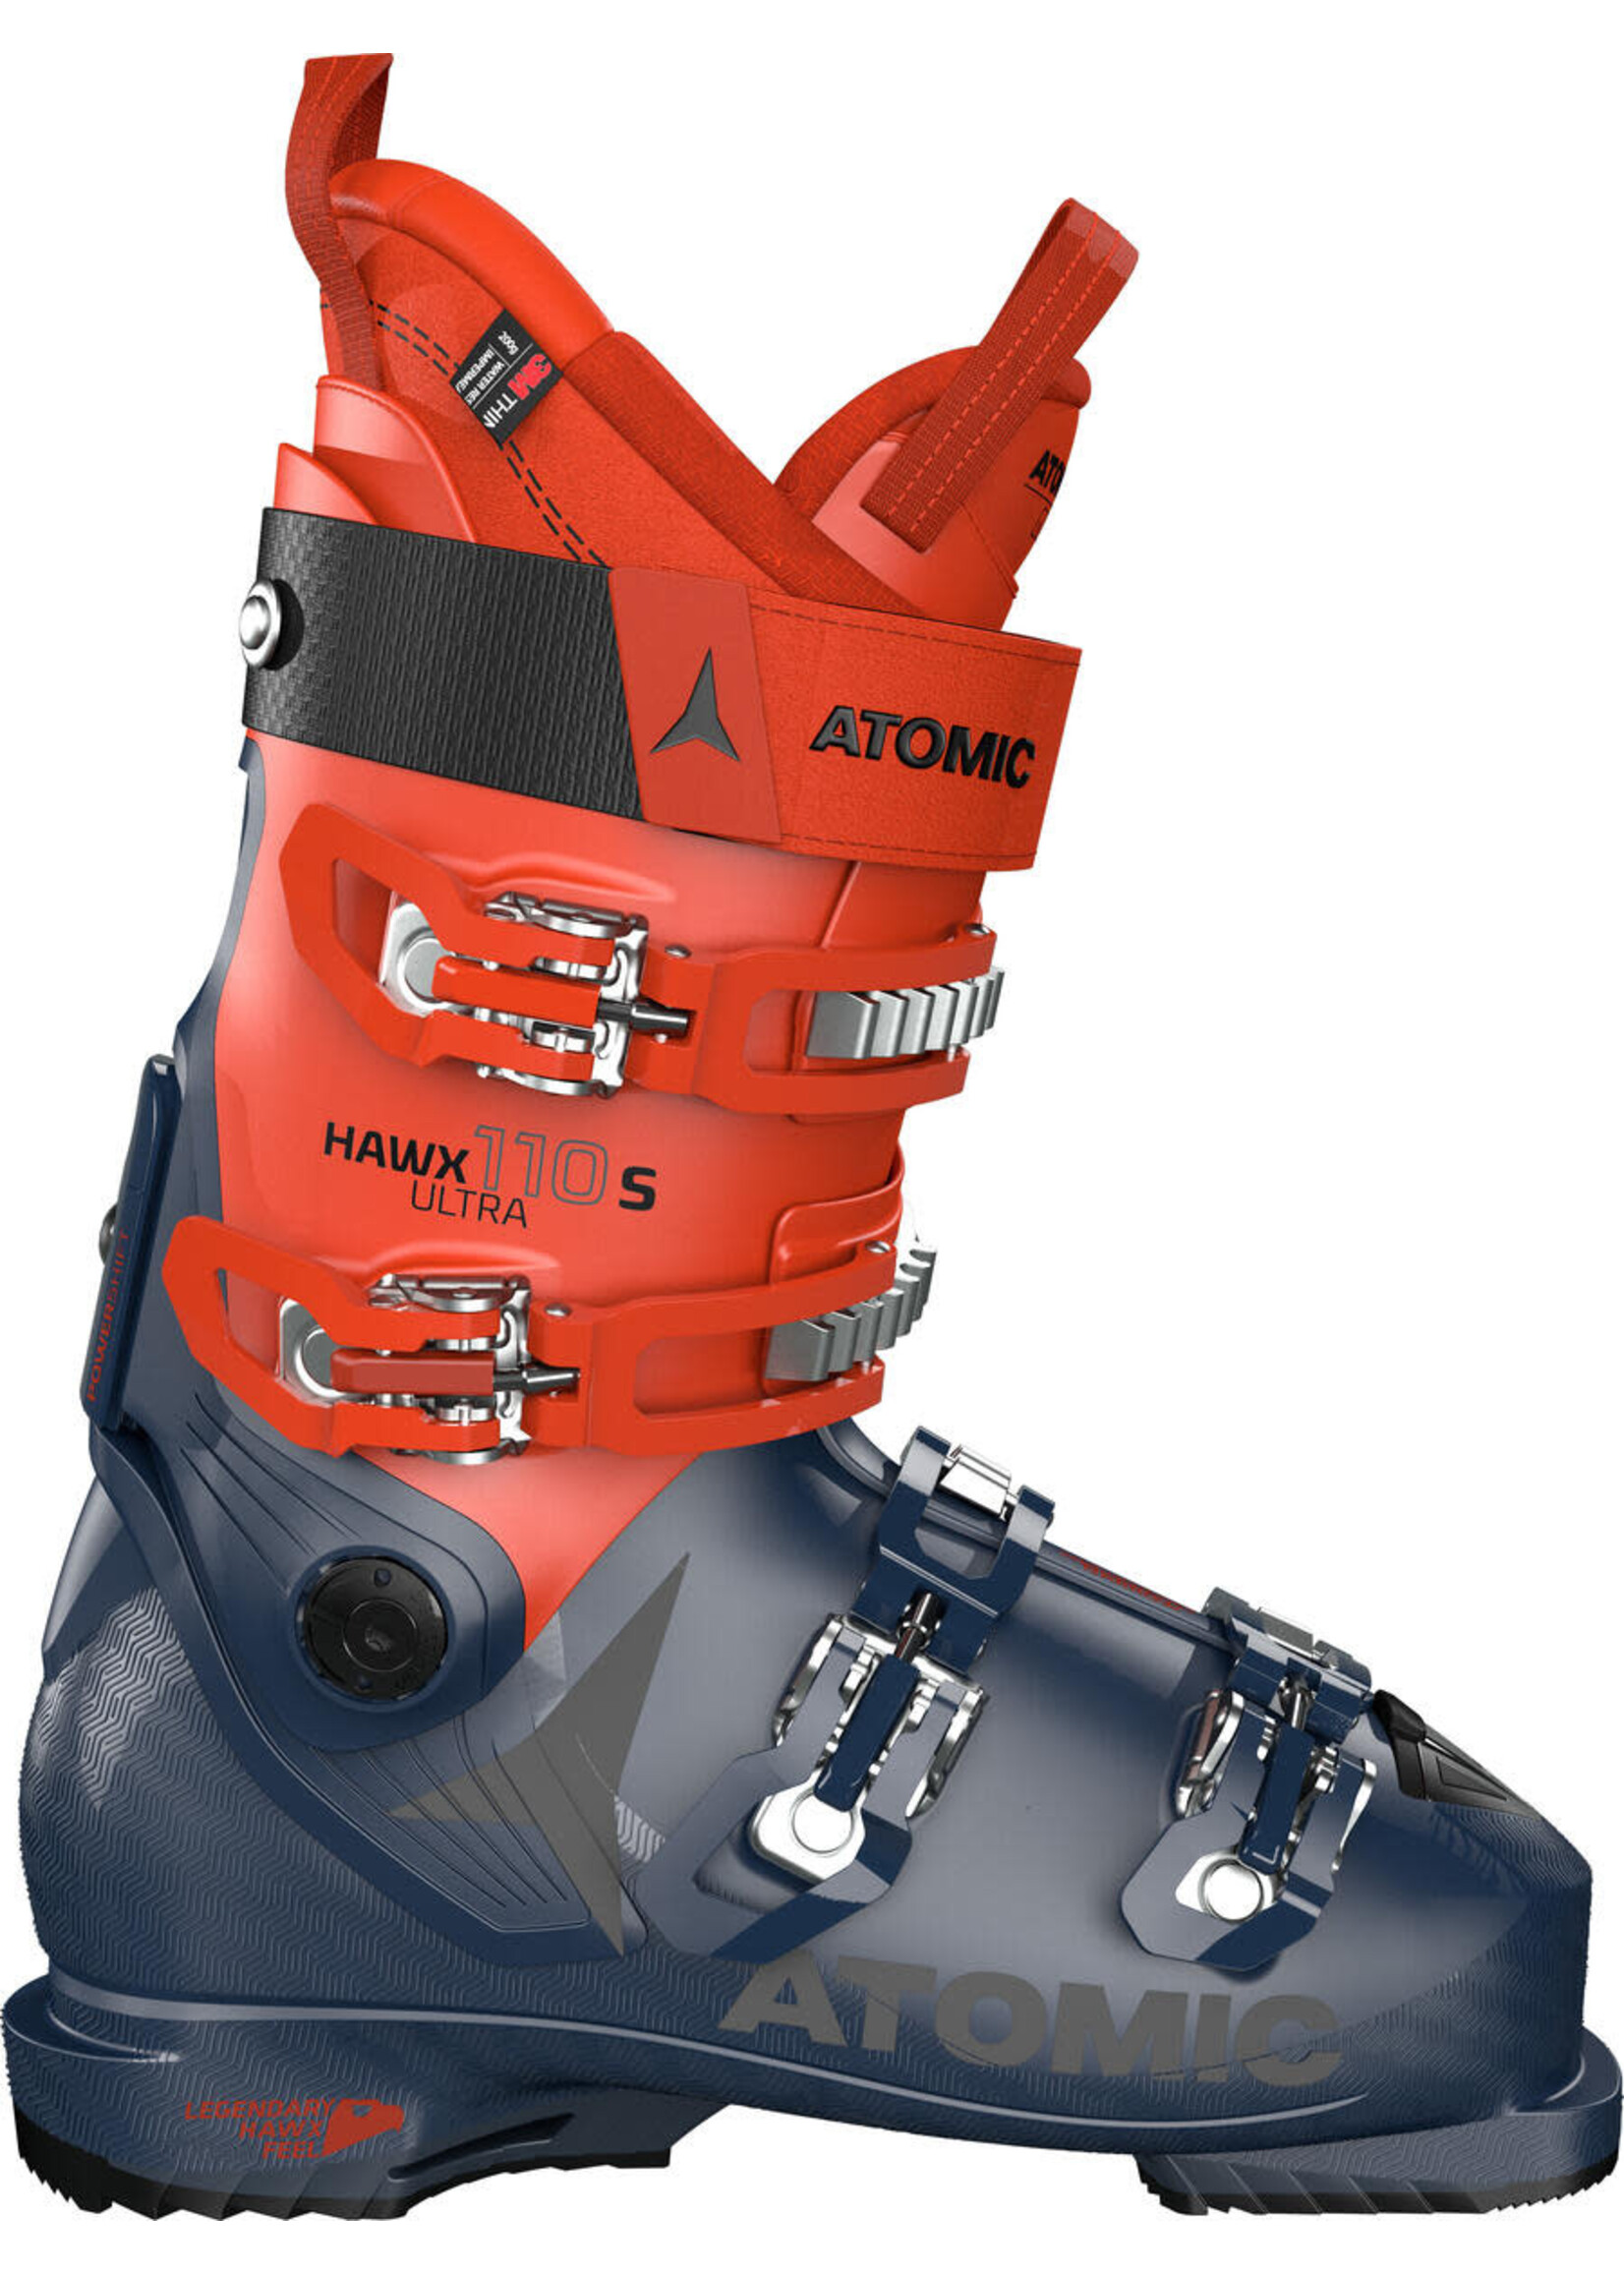 Atomic Ski Boot Alpine Hawx Ultra 110 S